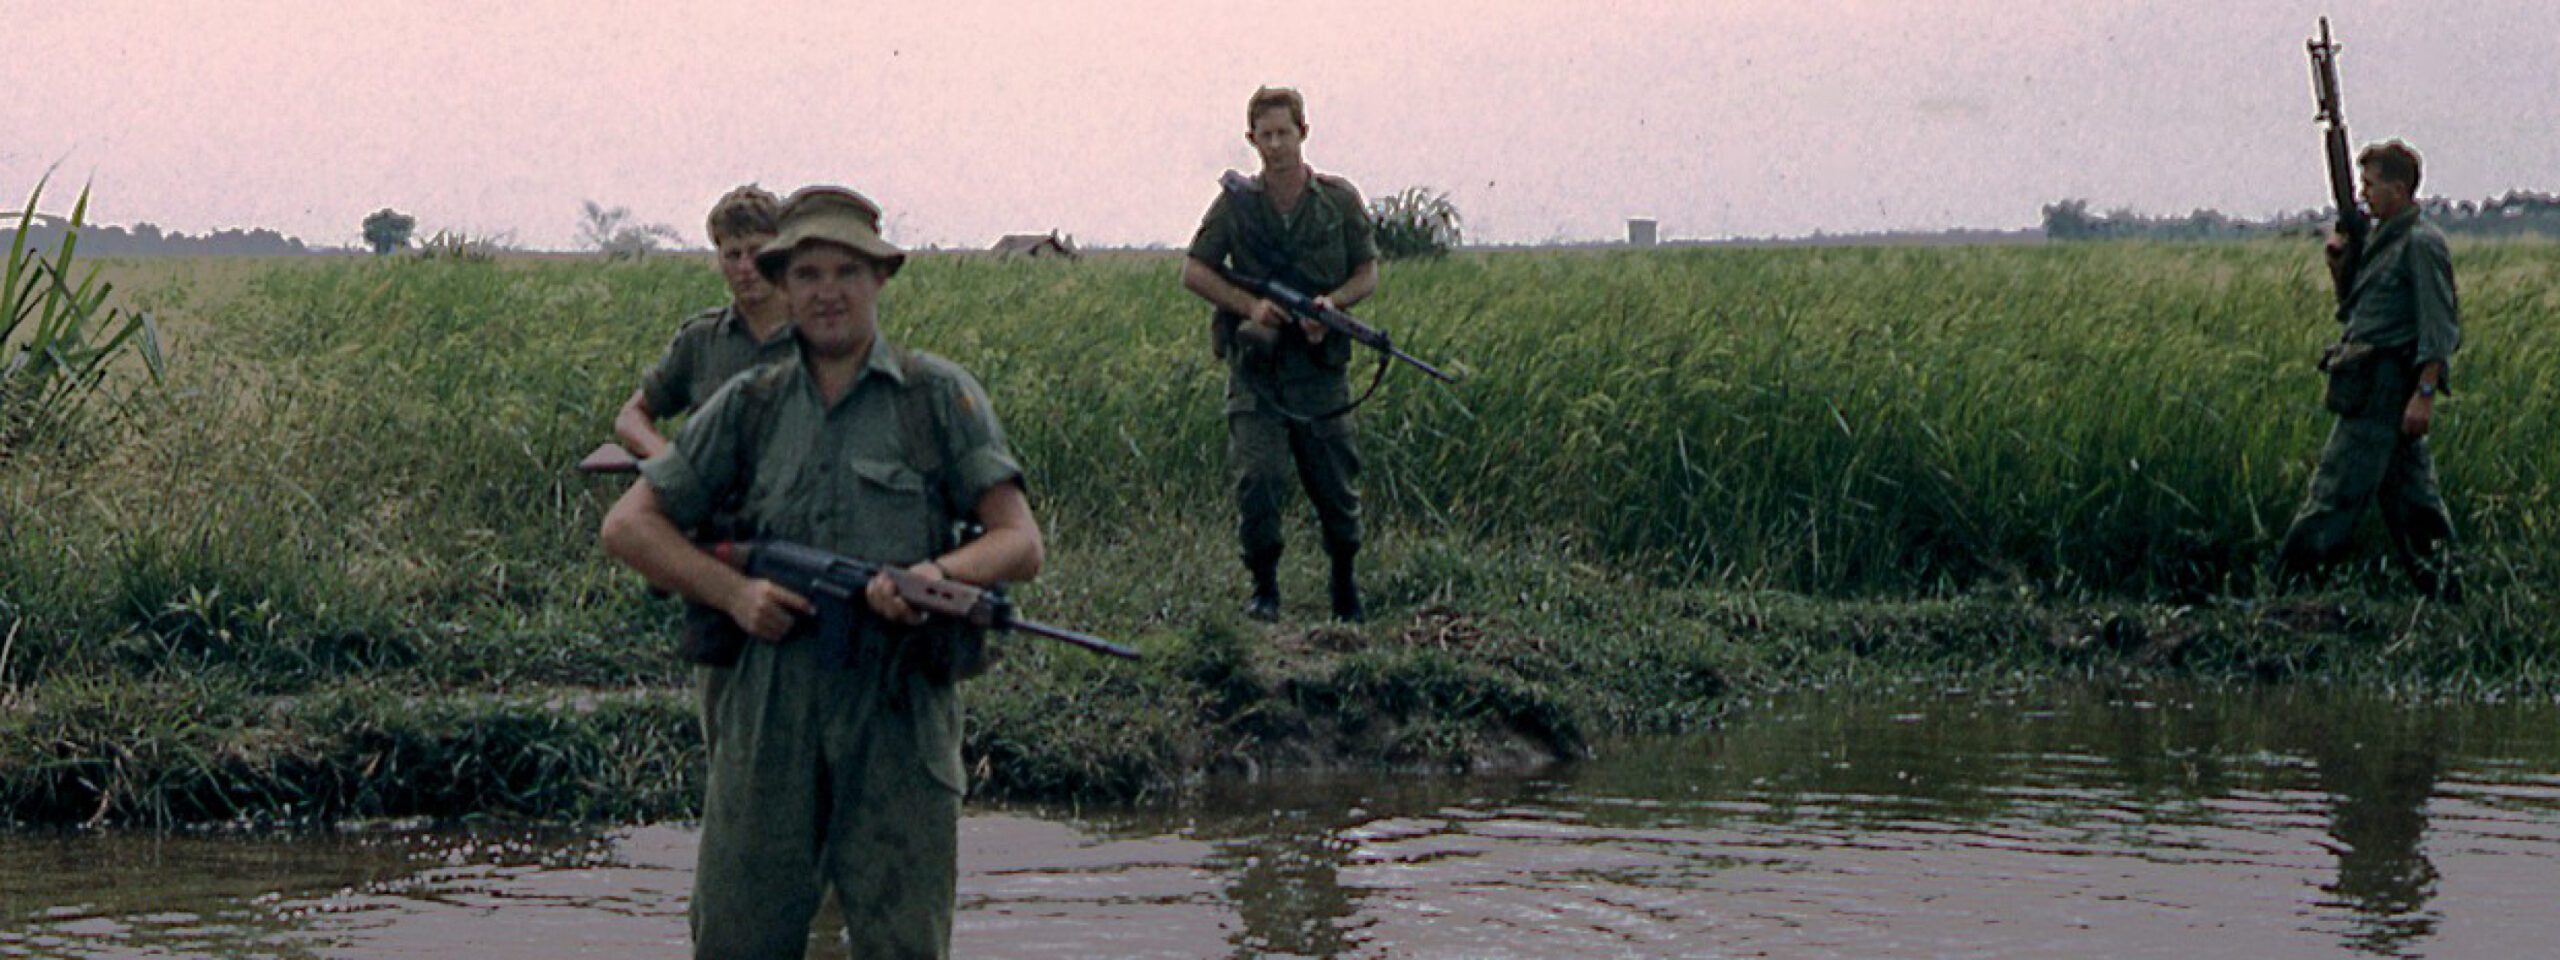 Vietnam Veterans Day – a 50th anniversary reflection